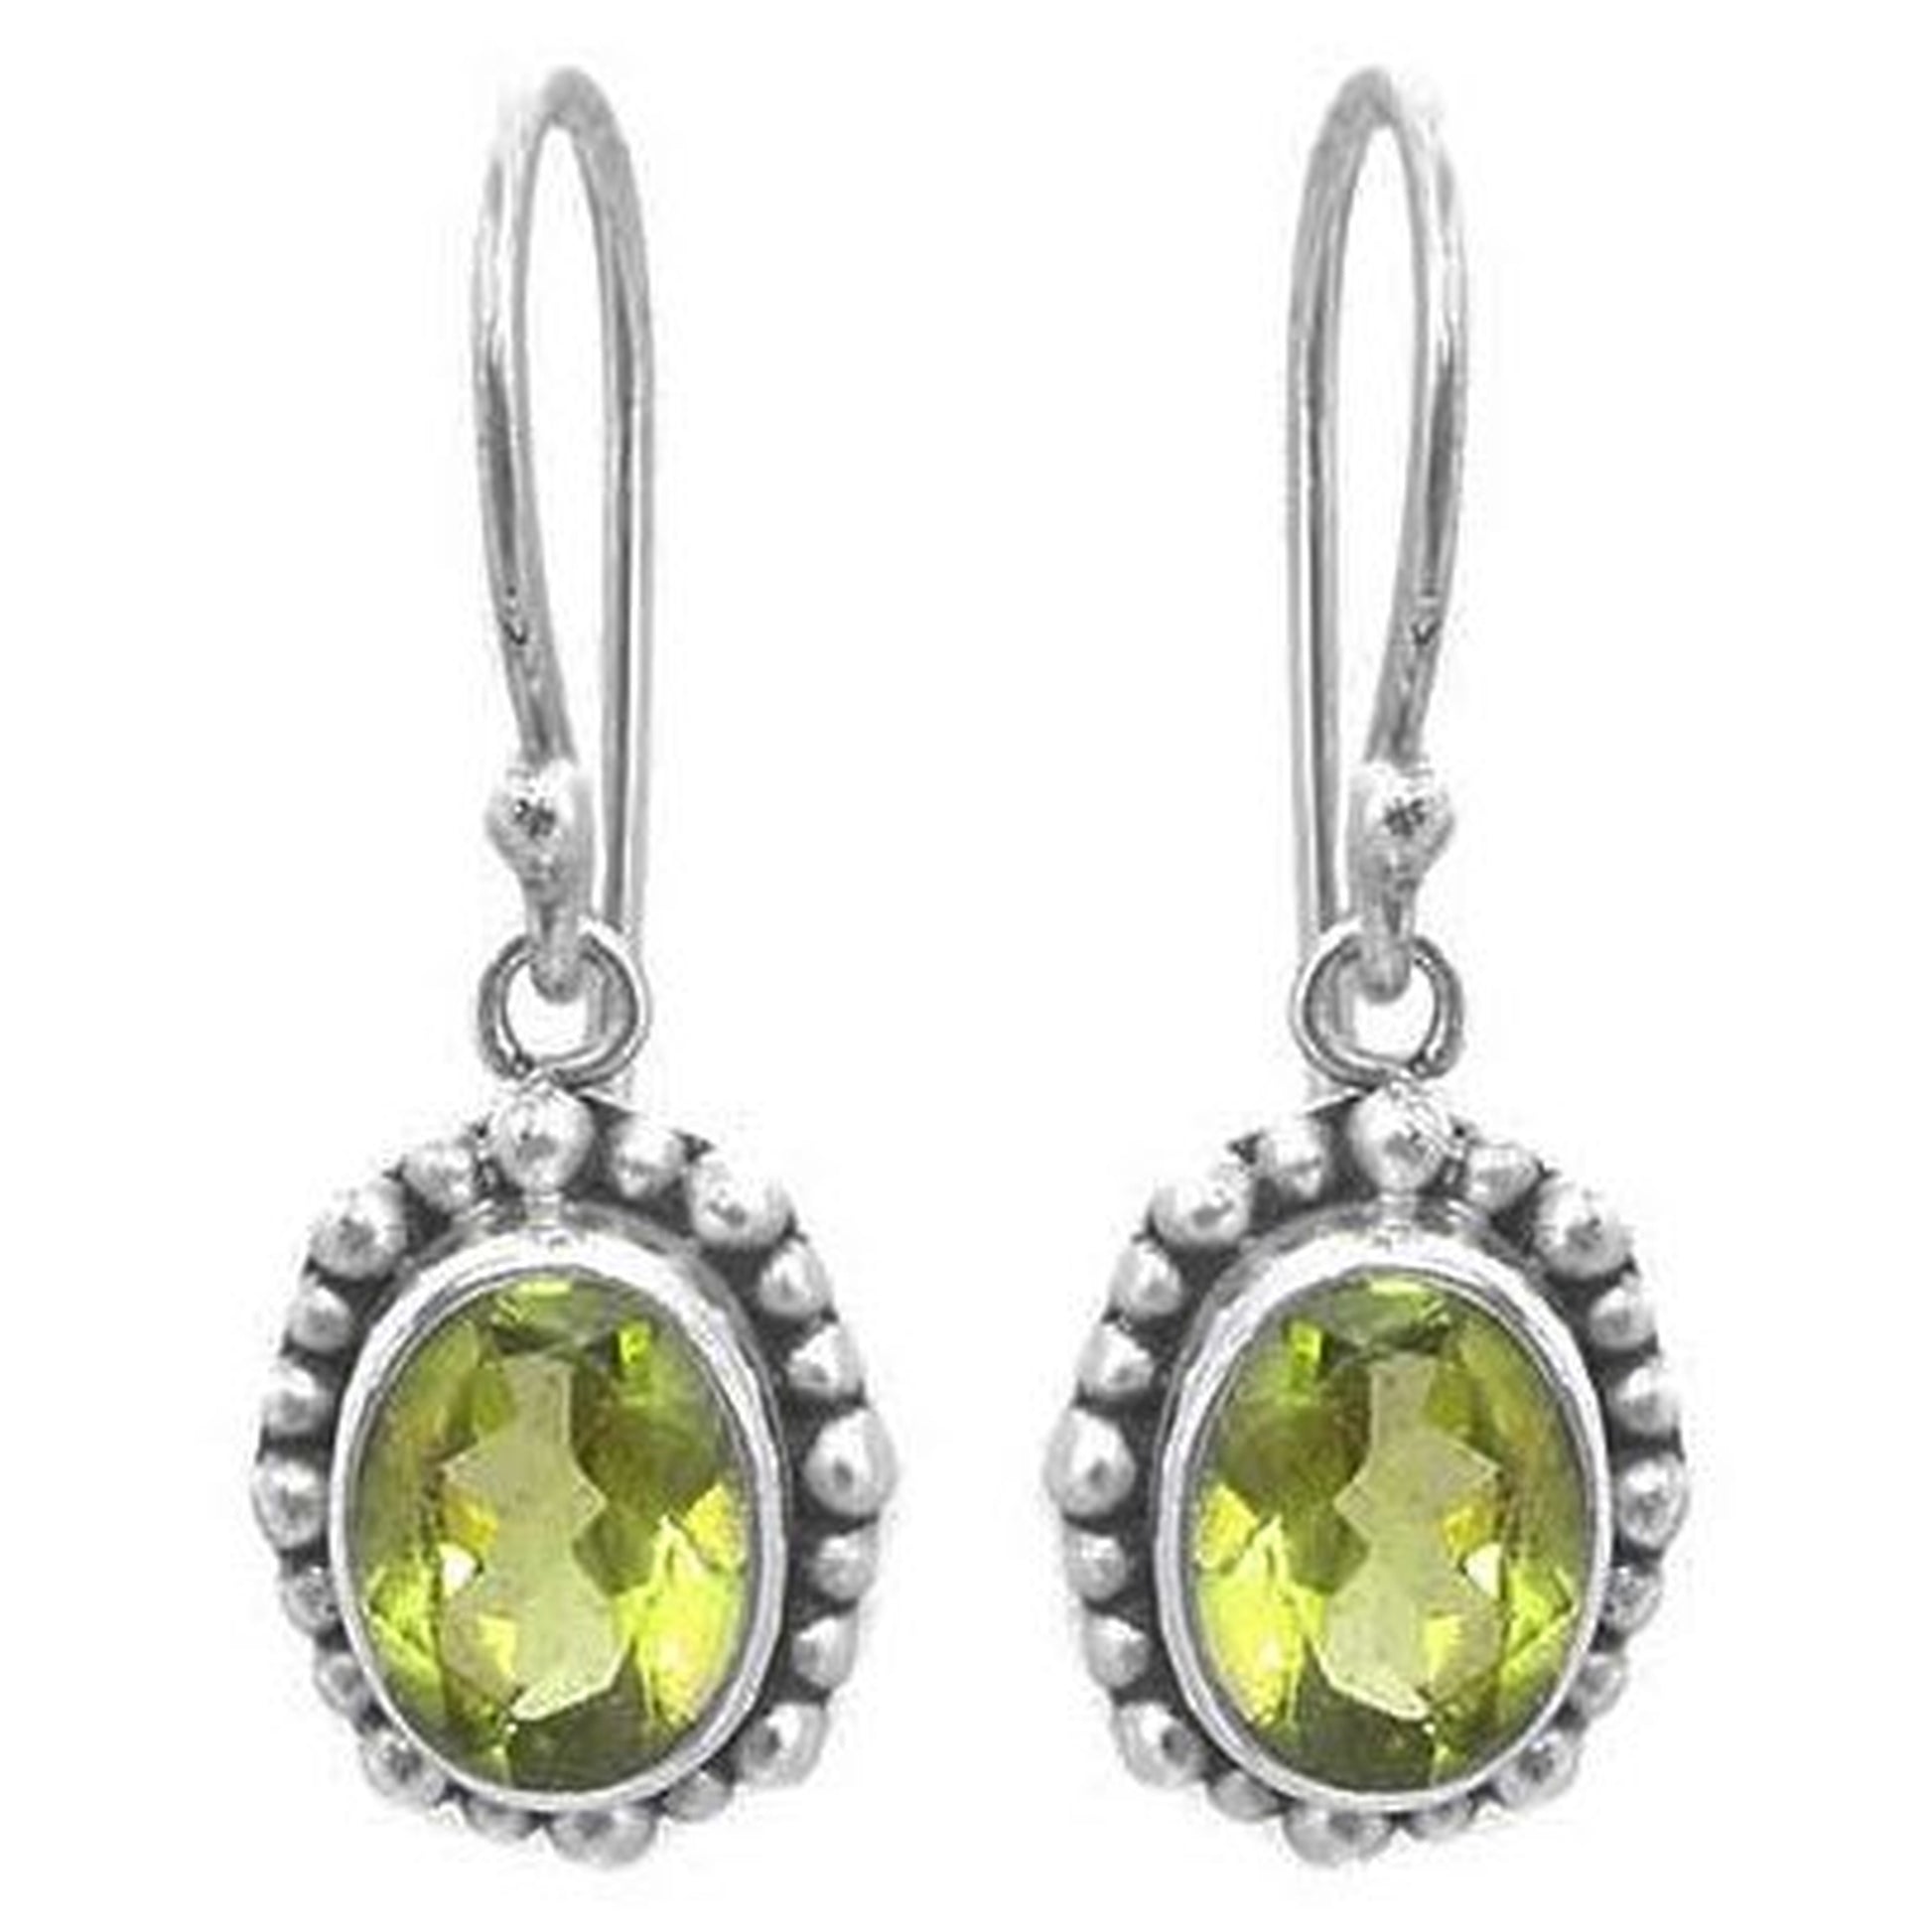 Silver earrings with oval peridot gemstones.